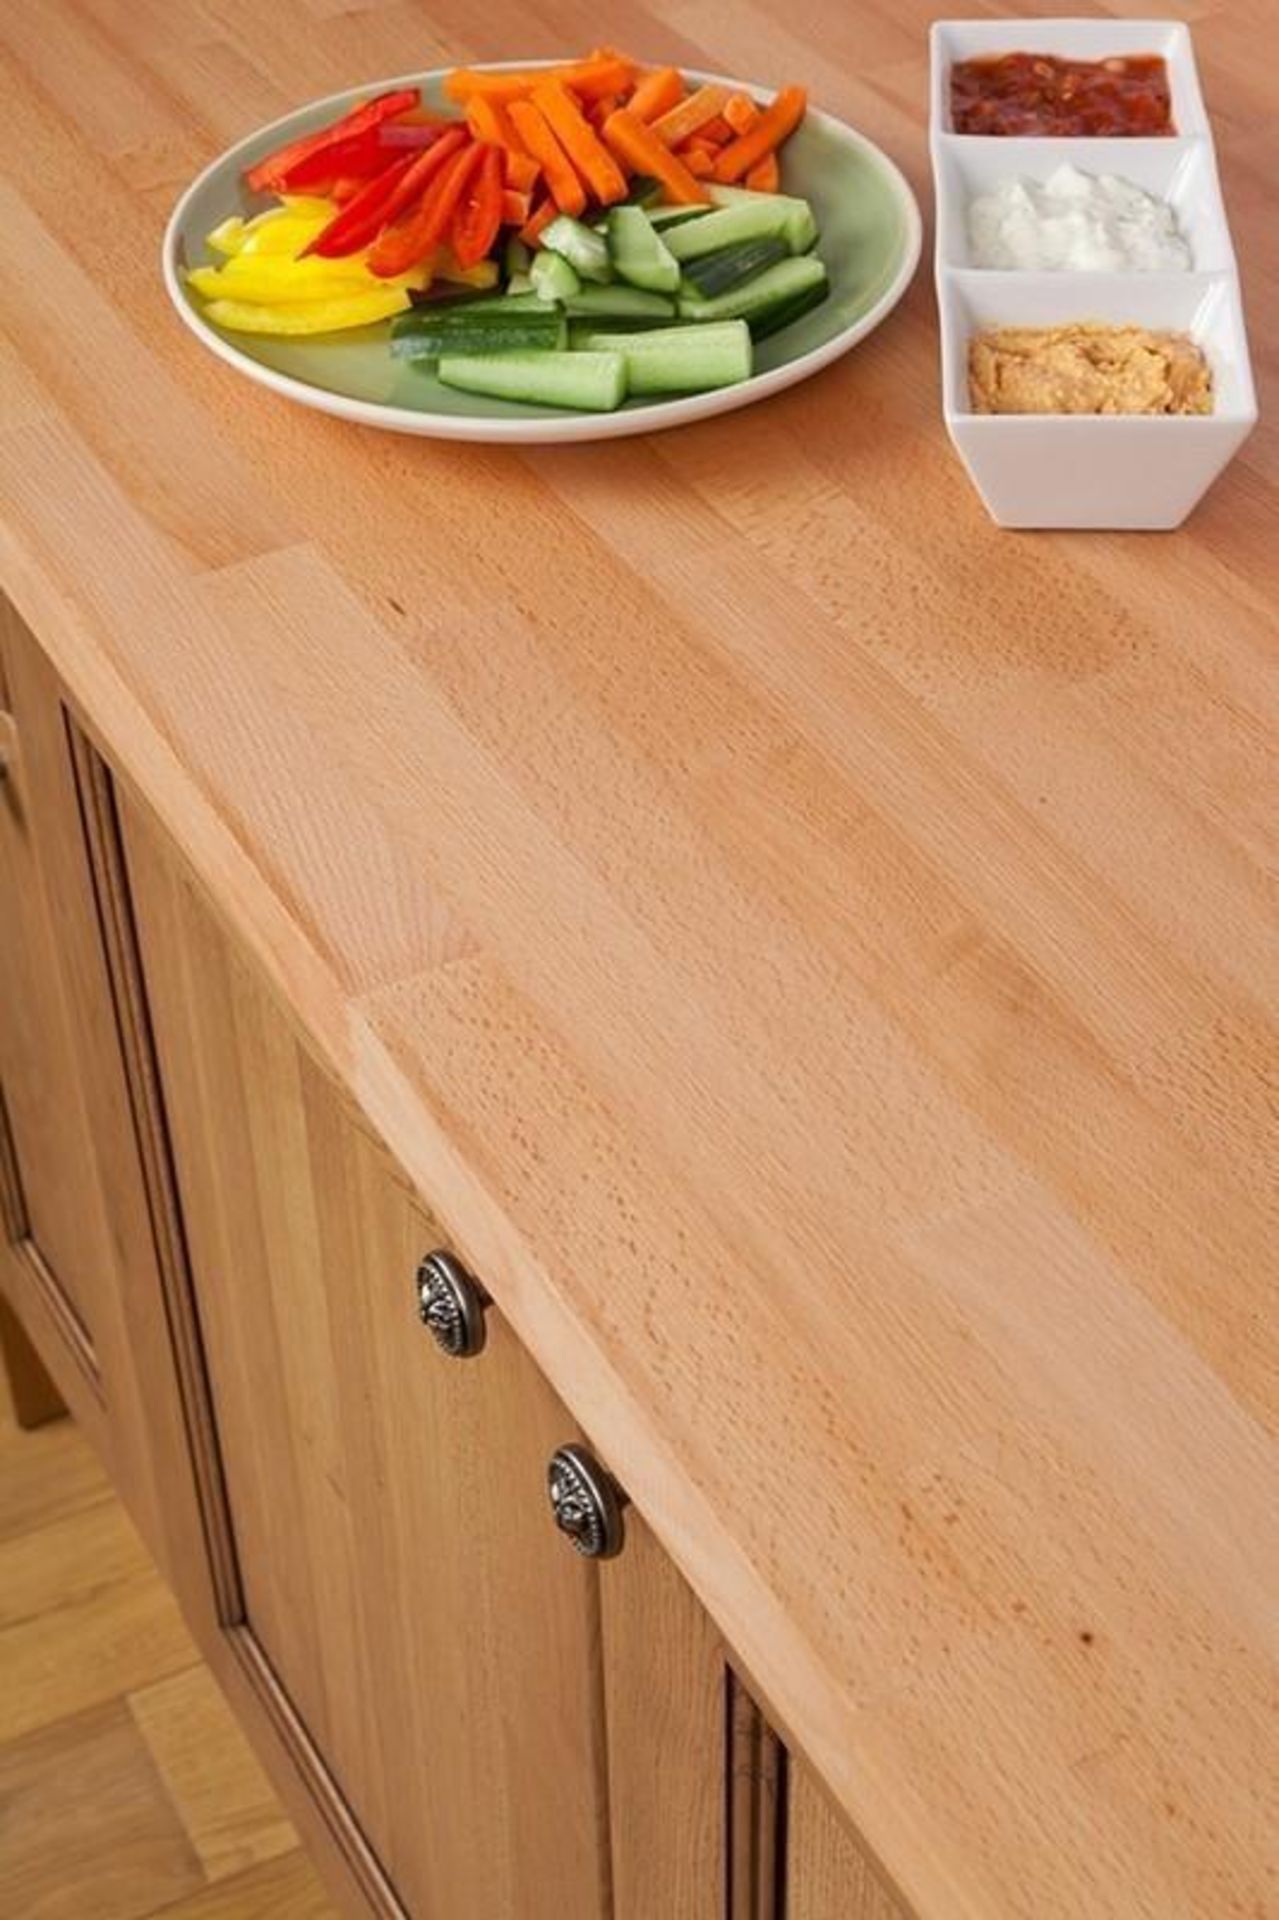 4 x Solid Wood Kitchen Worktops - PRIME BEECH - First Grade Finger Jointed Kitchen Worktop - Size: 2